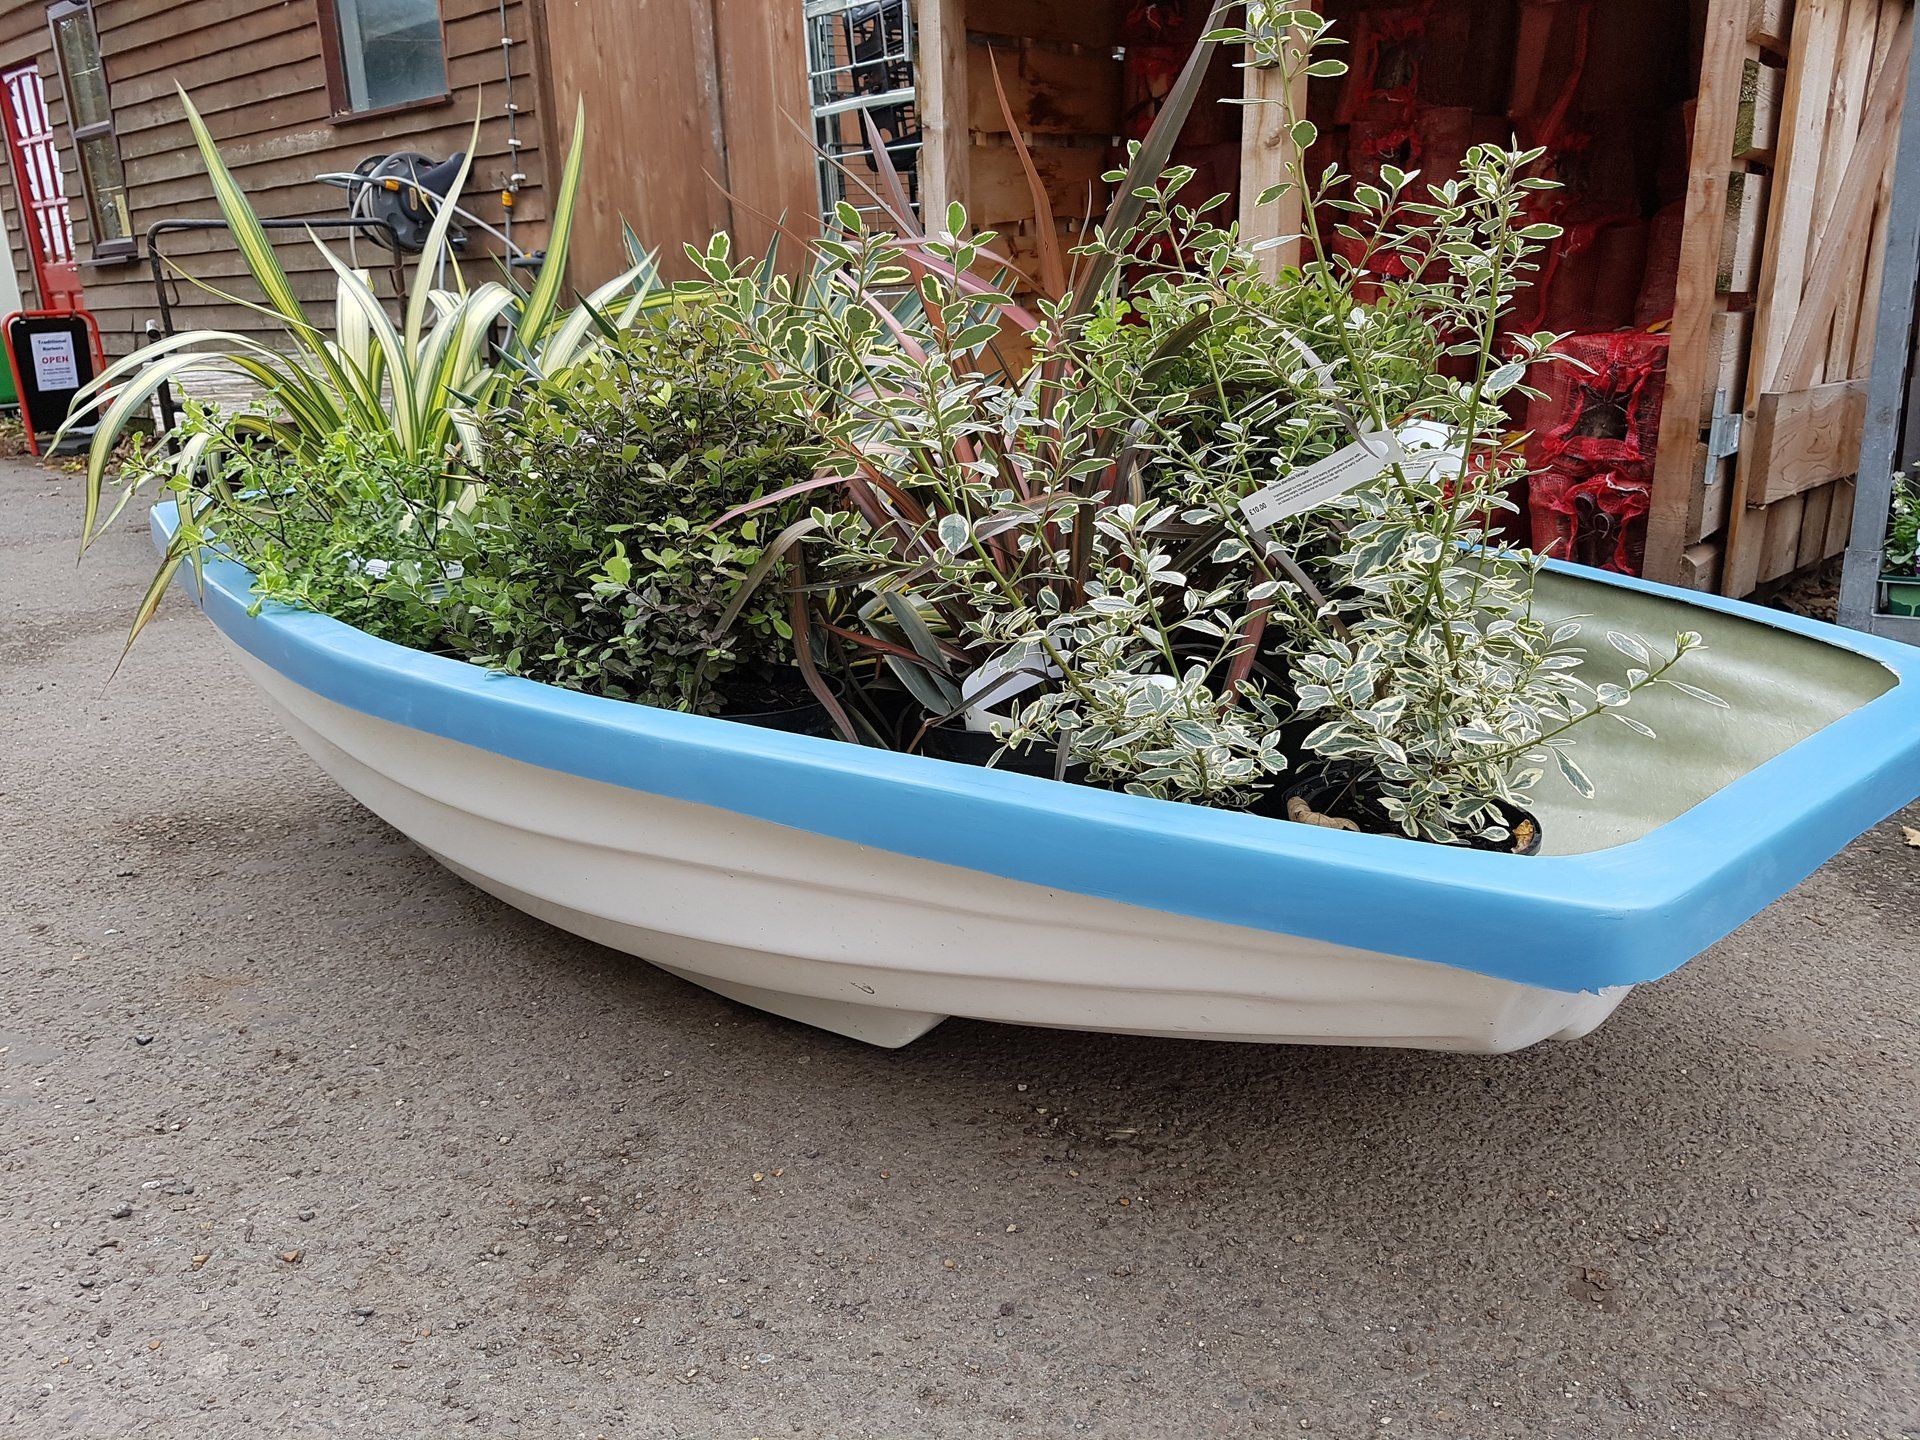 wooden rowing boat garden feature suffolk, uk